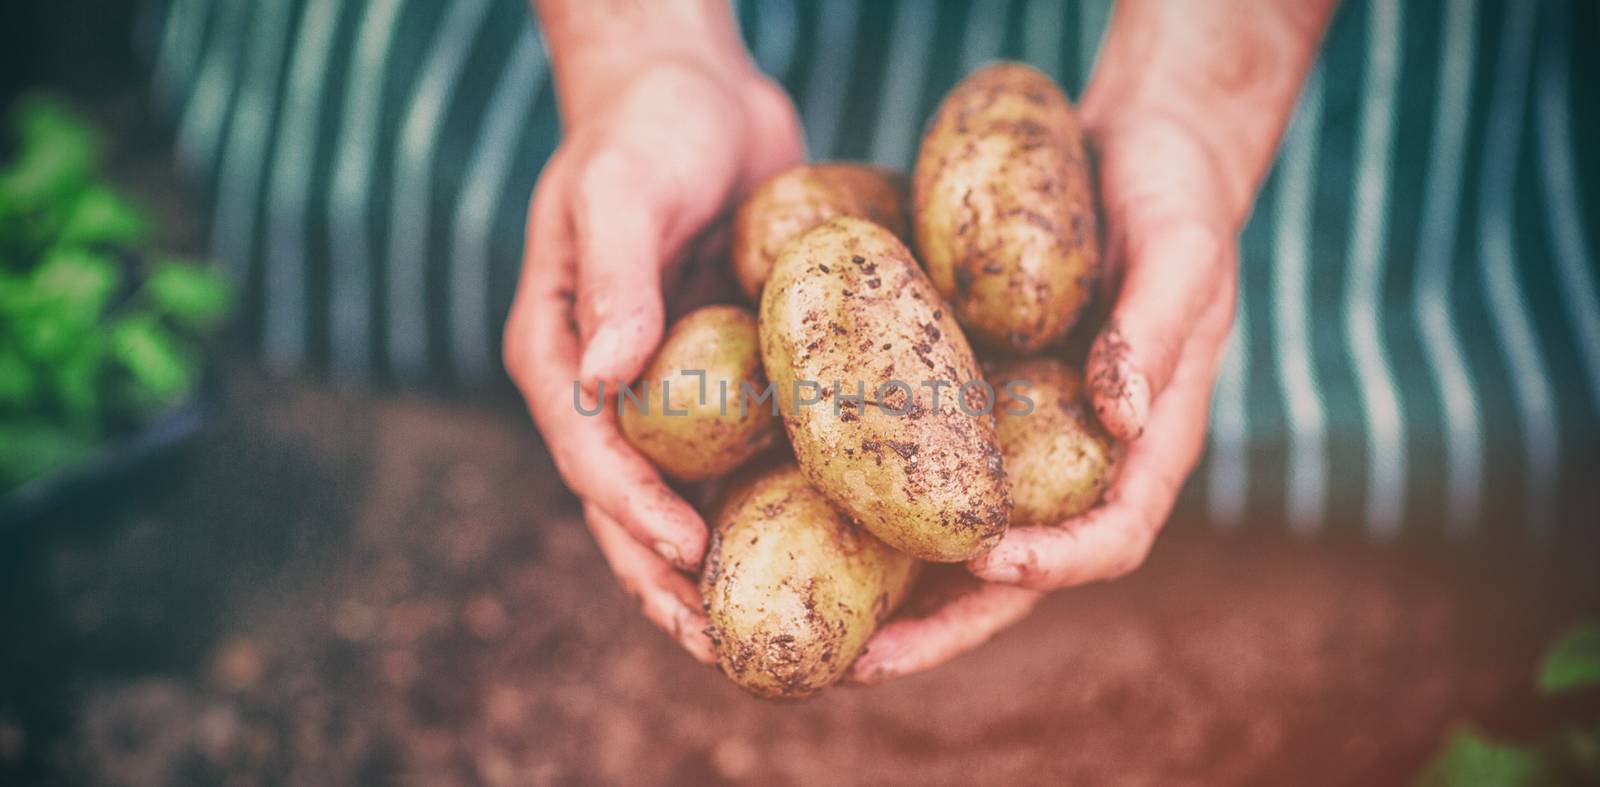 Gardener harvesting potatoes at greenhouse by Wavebreakmedia